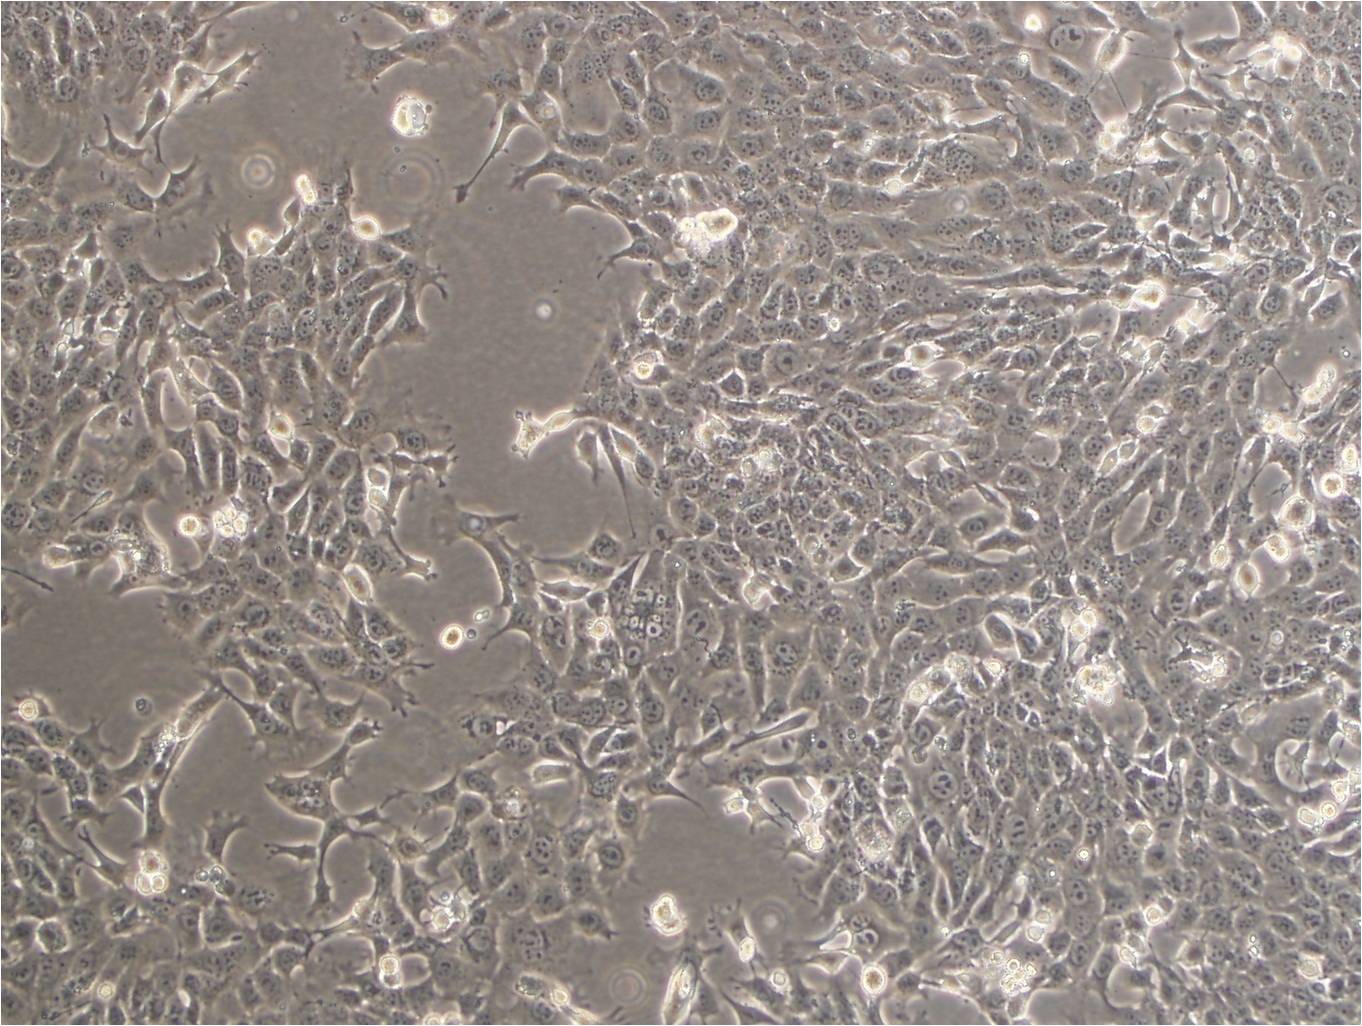 H19-7 epithelioid cells大鼠海马神经元细胞系,H19-7 epithelioid cells